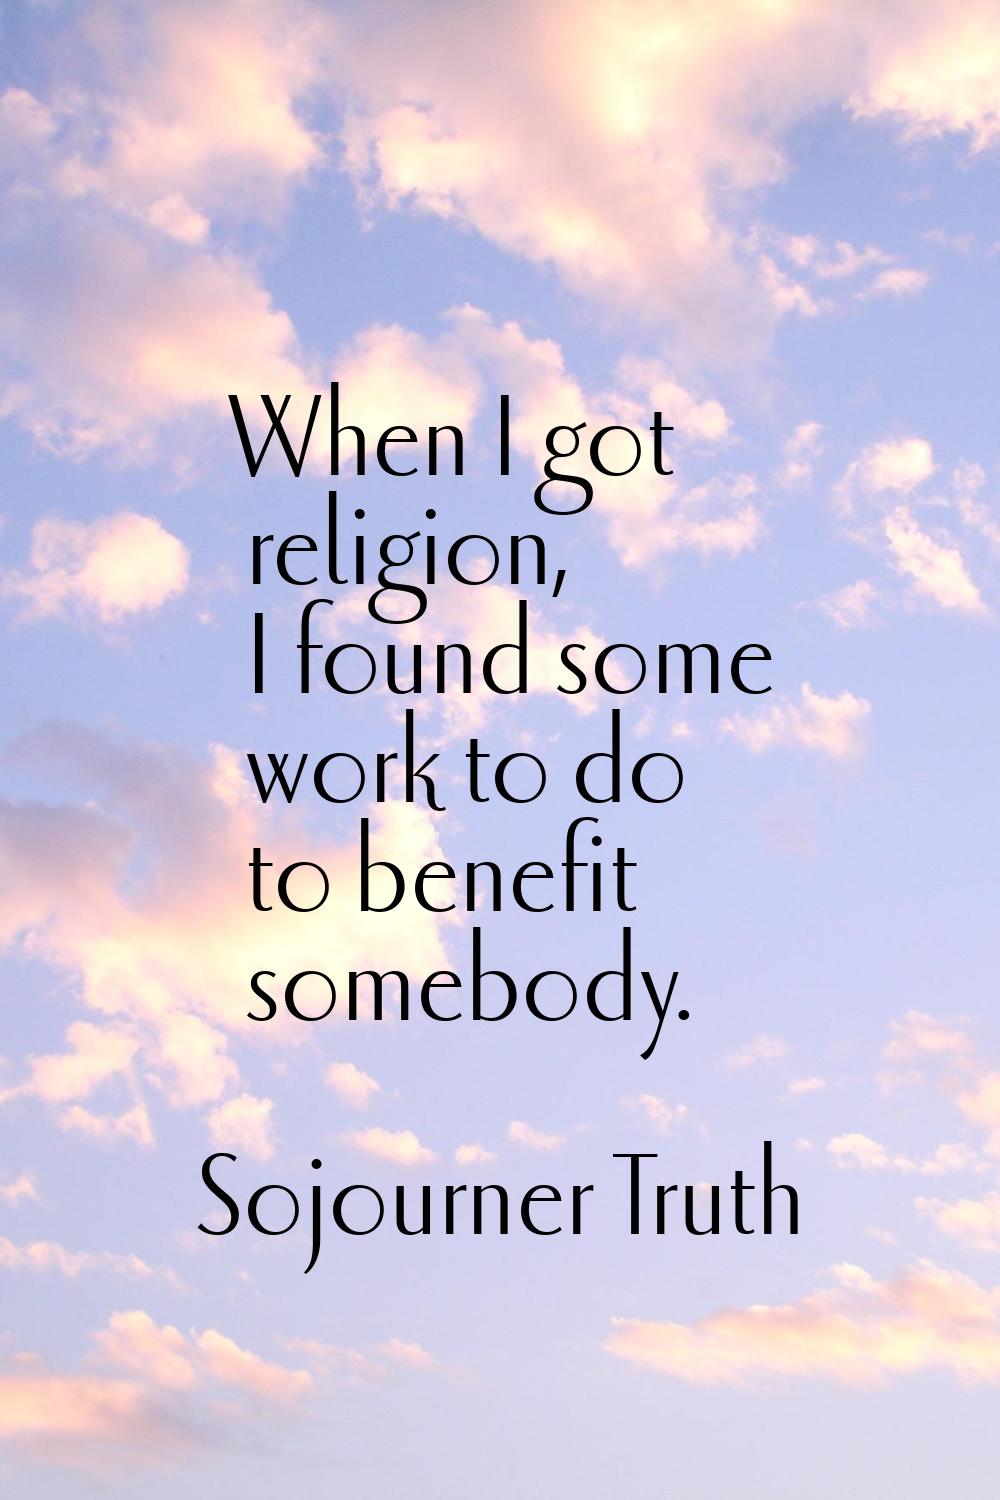 When I got religion, I found some work to do to benefit somebody.